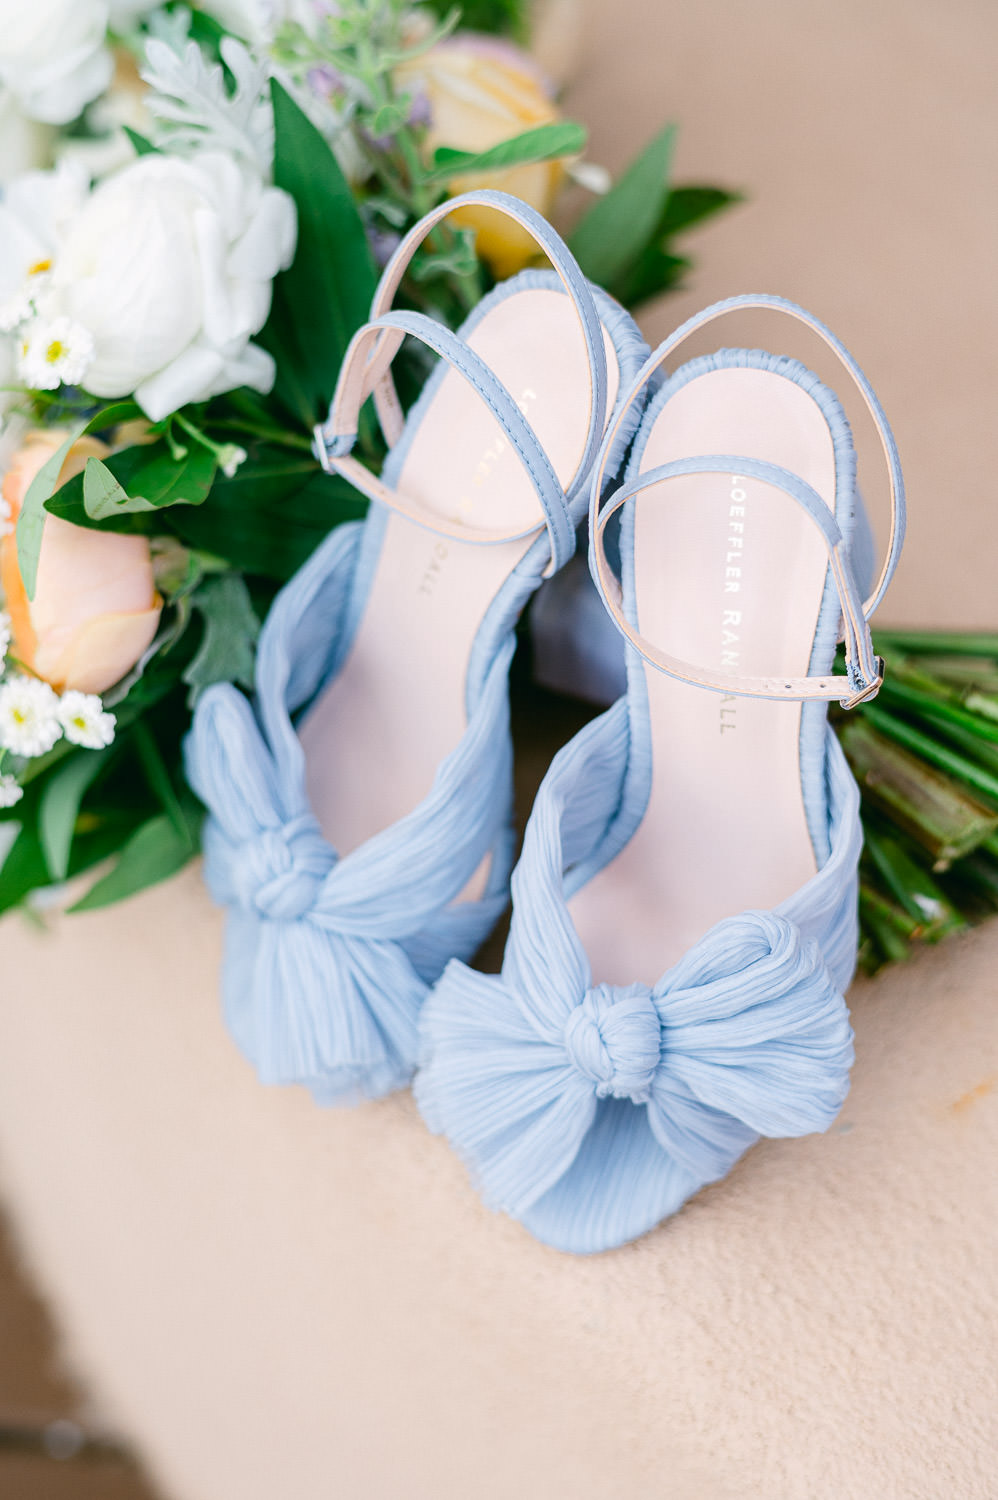 Blue Loeffler Randall wedding sandals in front of a bouquet.